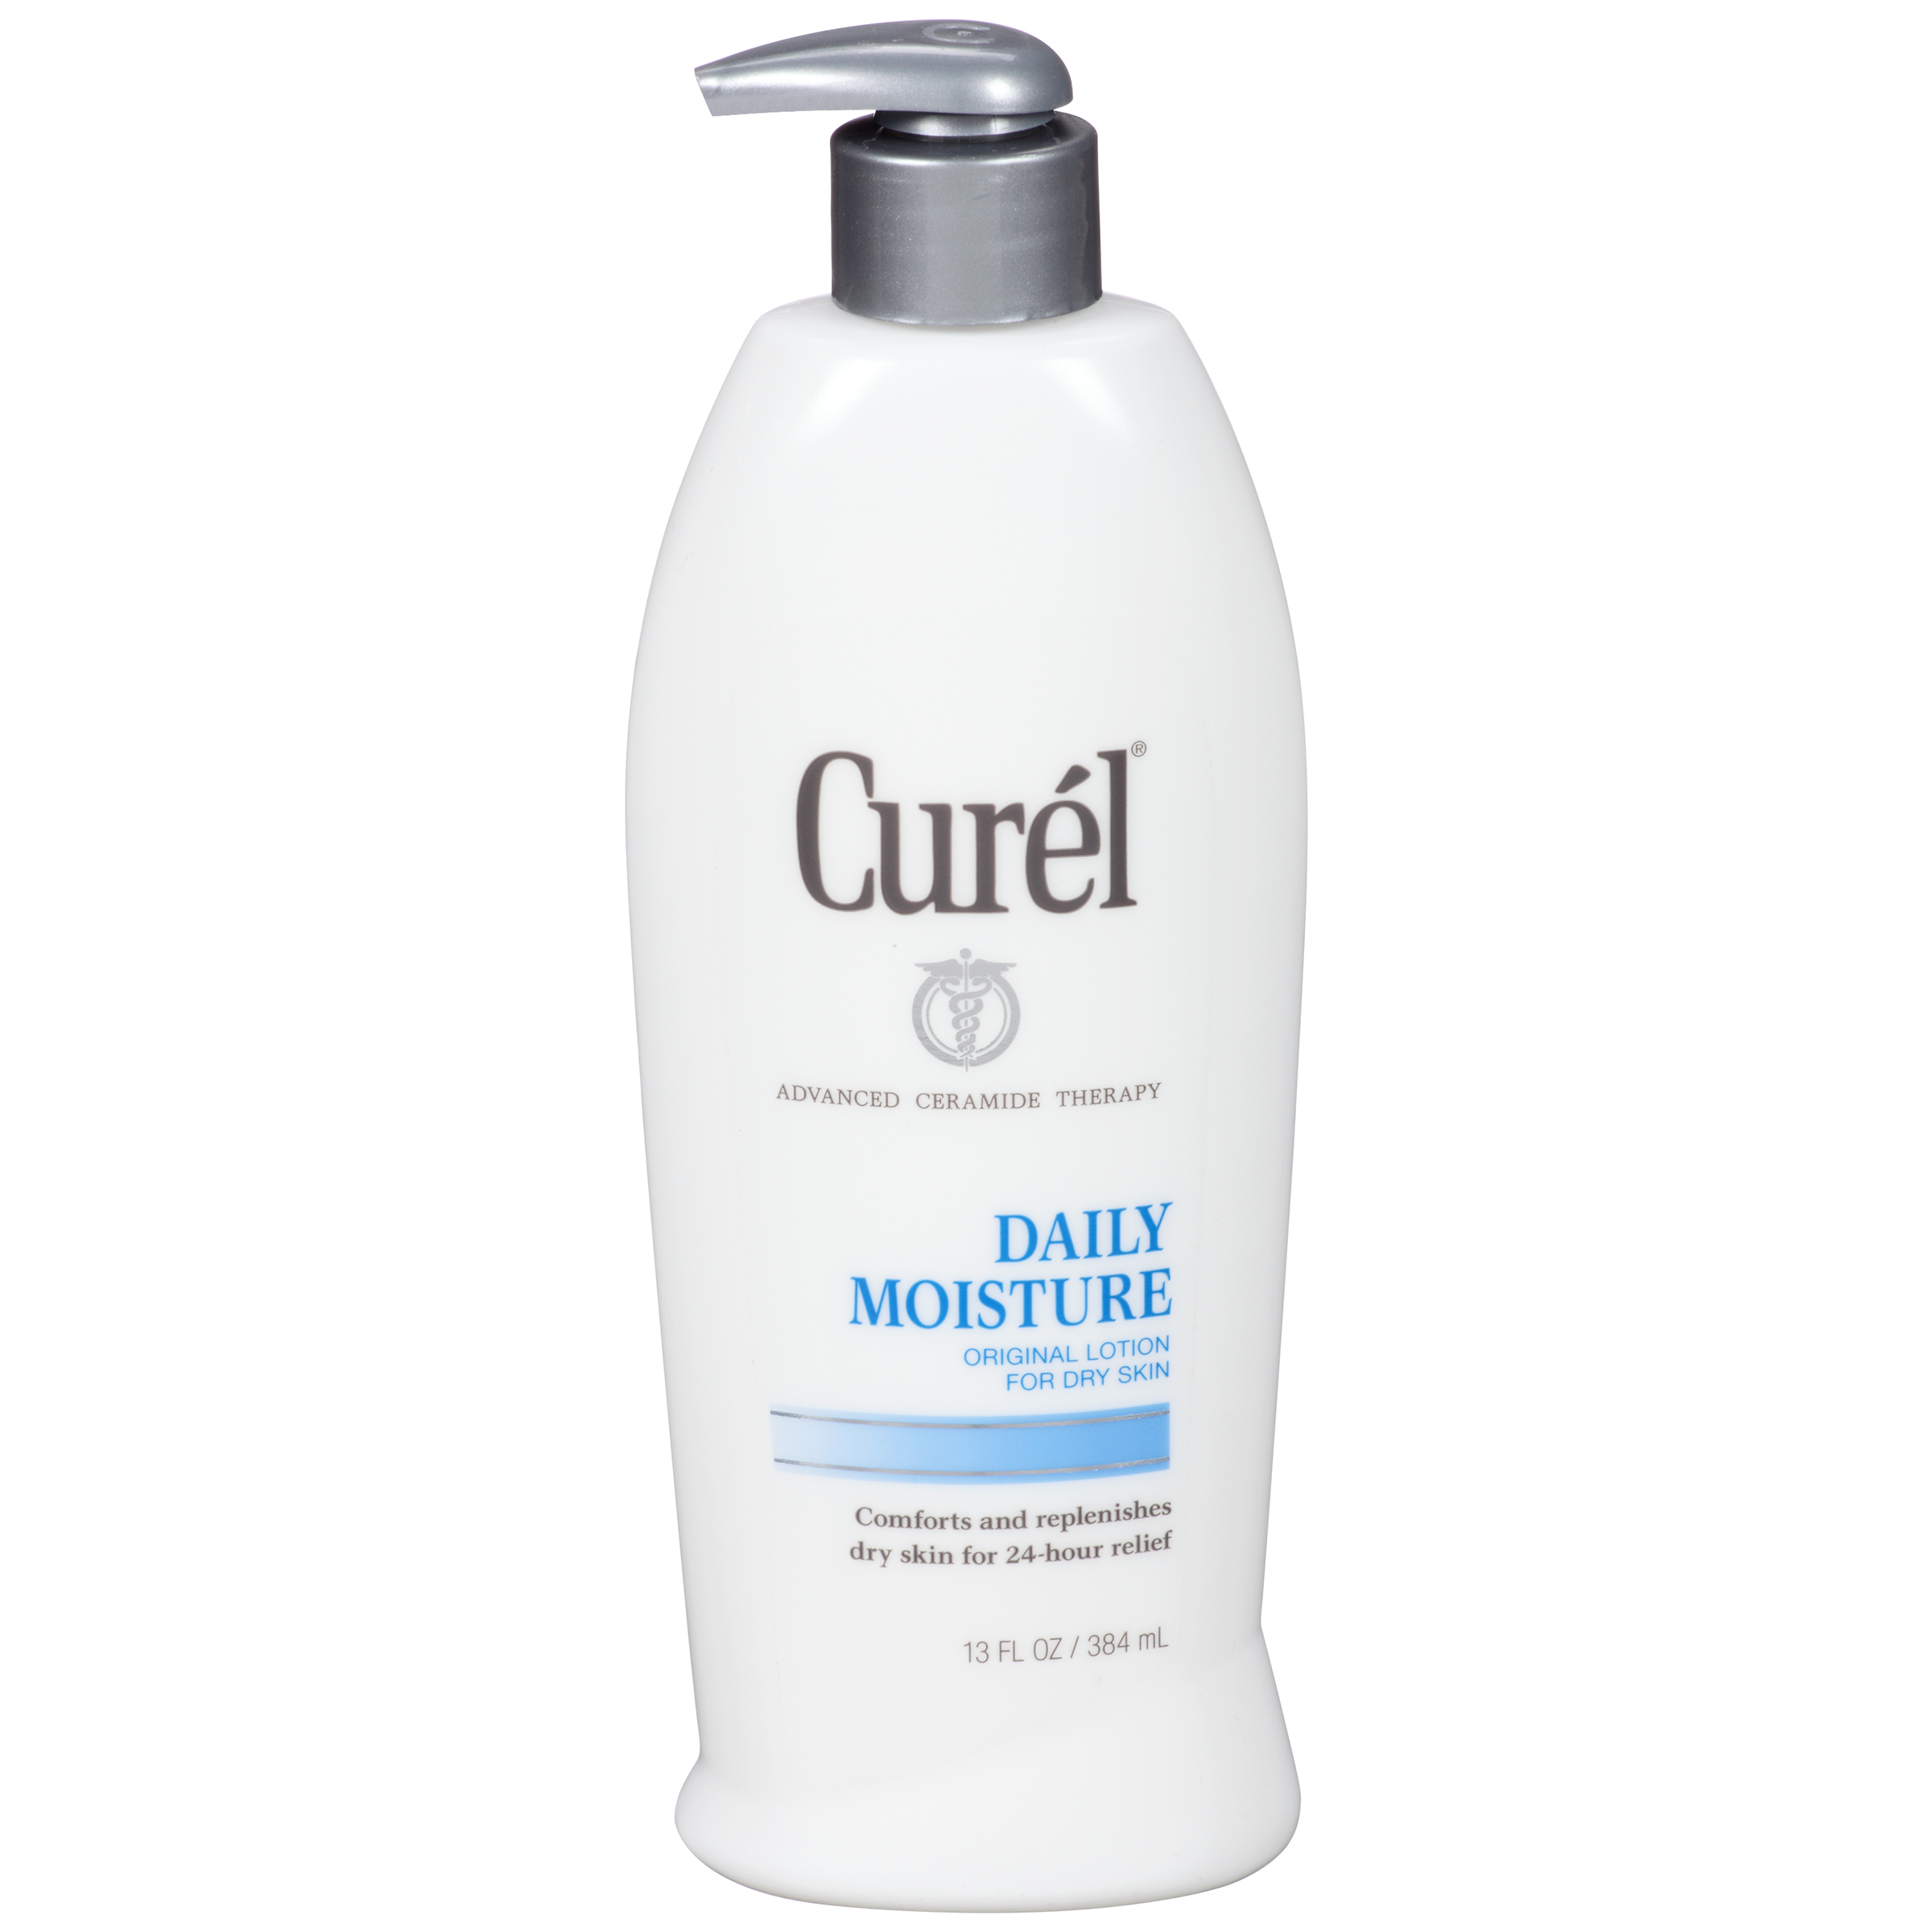 Curel Daily Moisture Original For Dry Skin Lotion 13 FL OZ PUMP